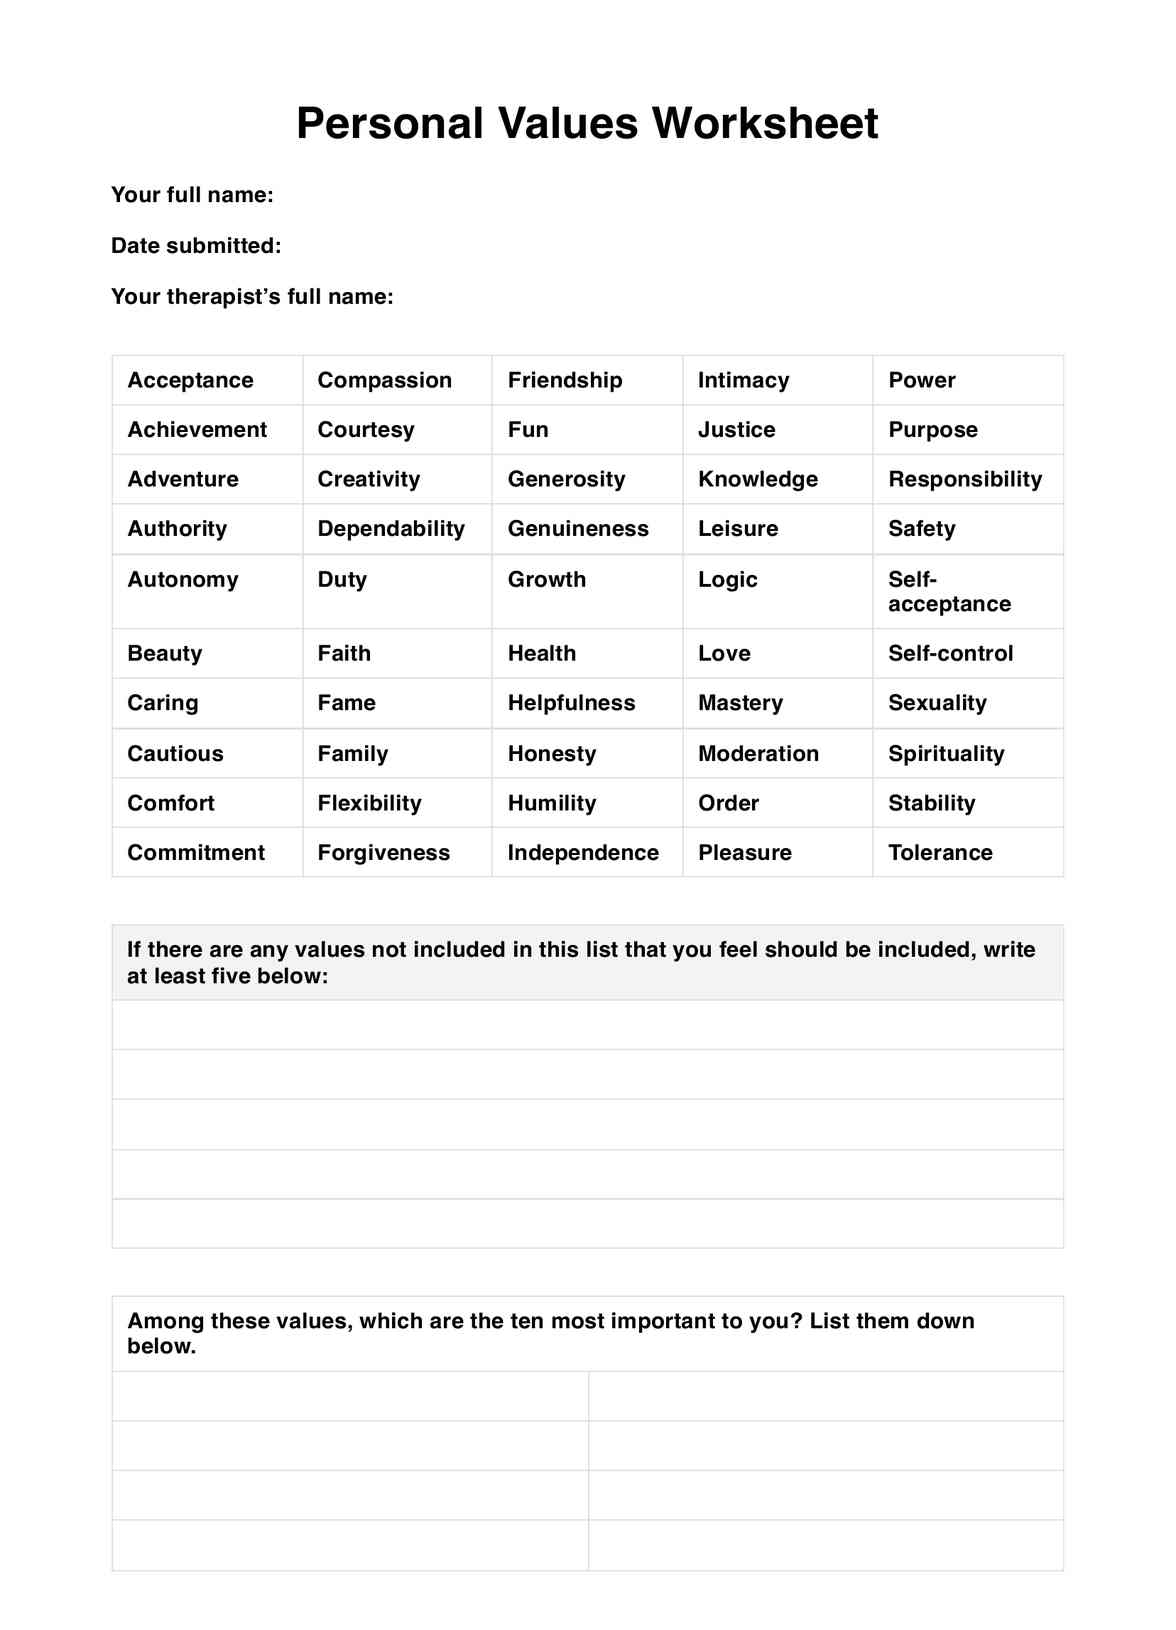 Personal Values Worksheet PDF Example